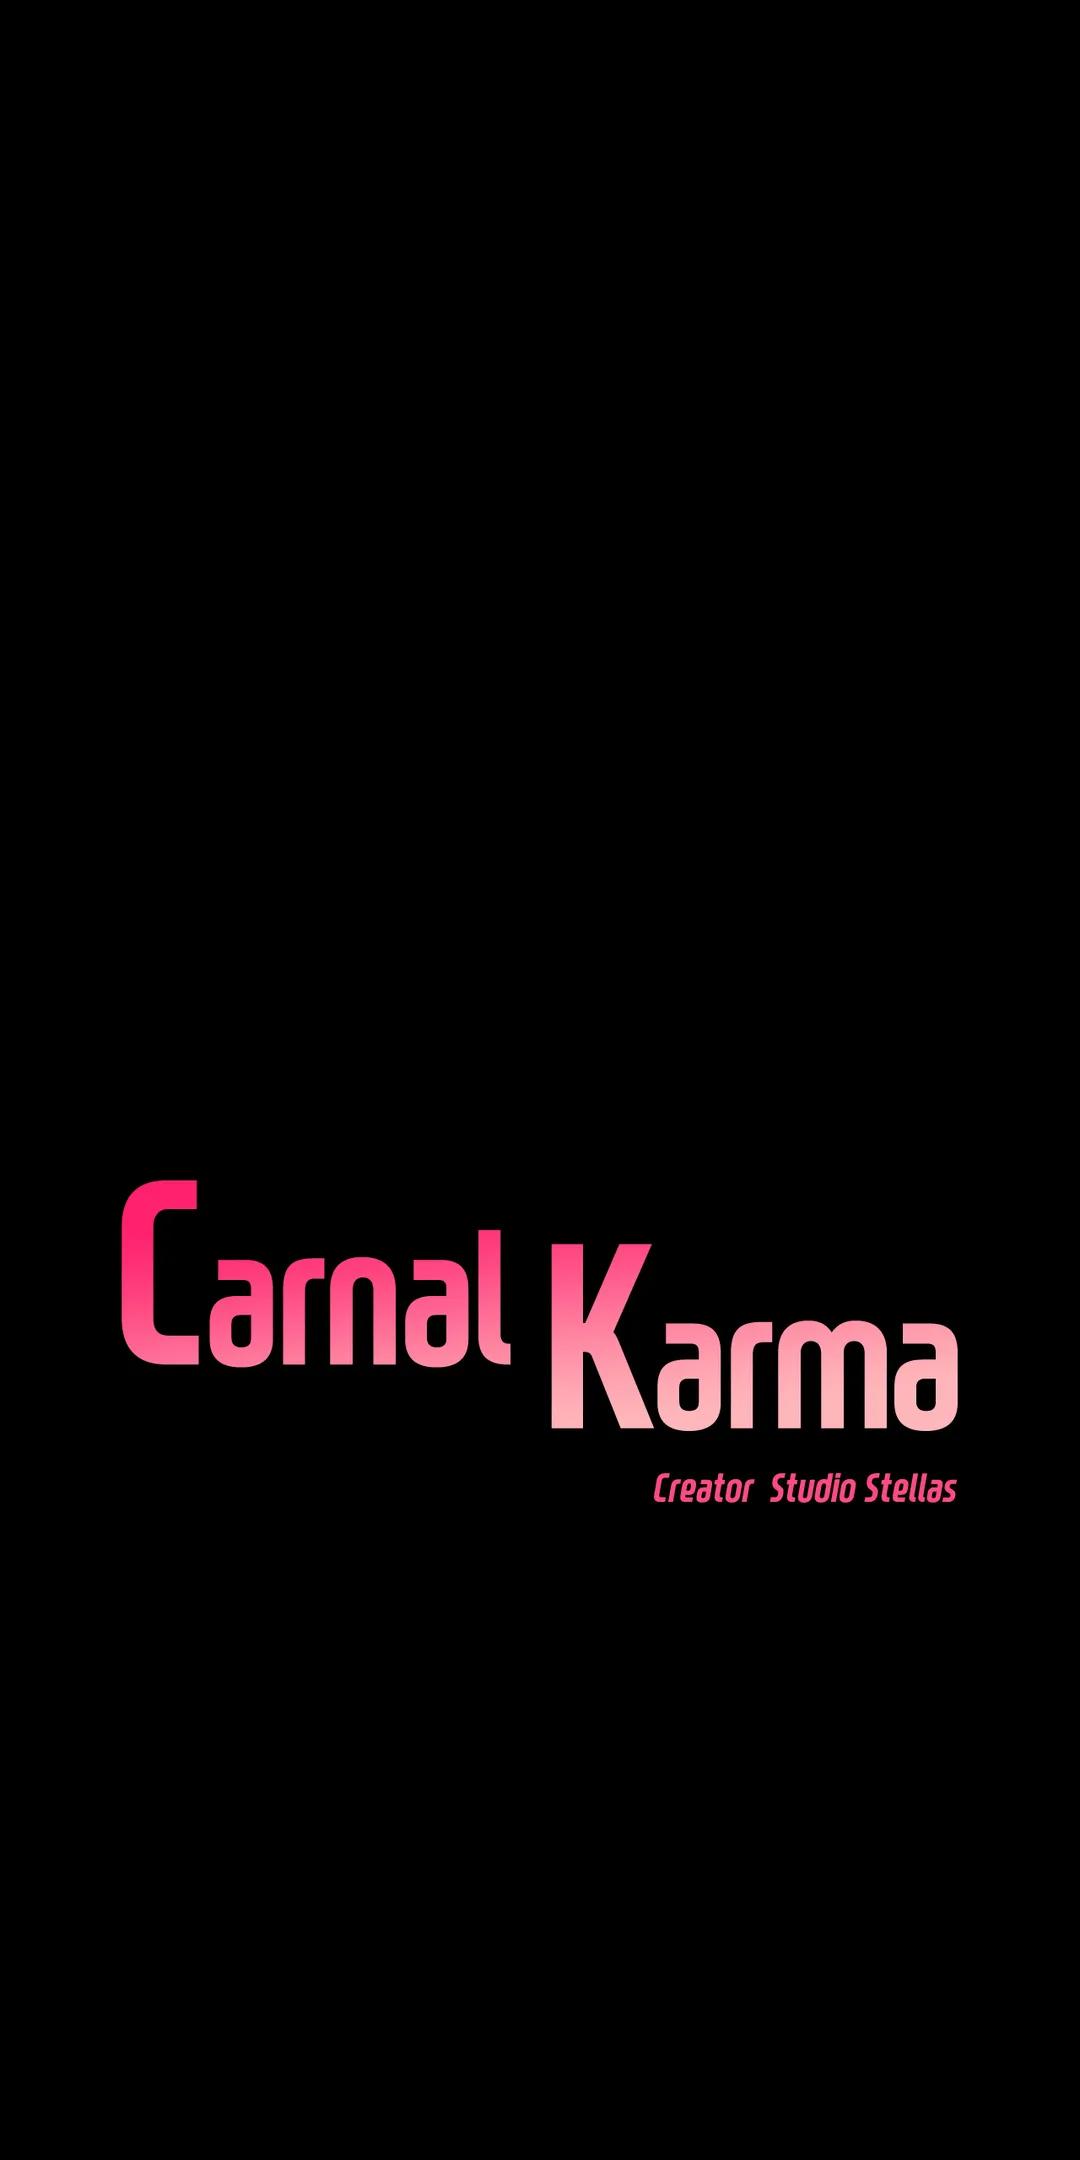 Carnal Karma - Page 2